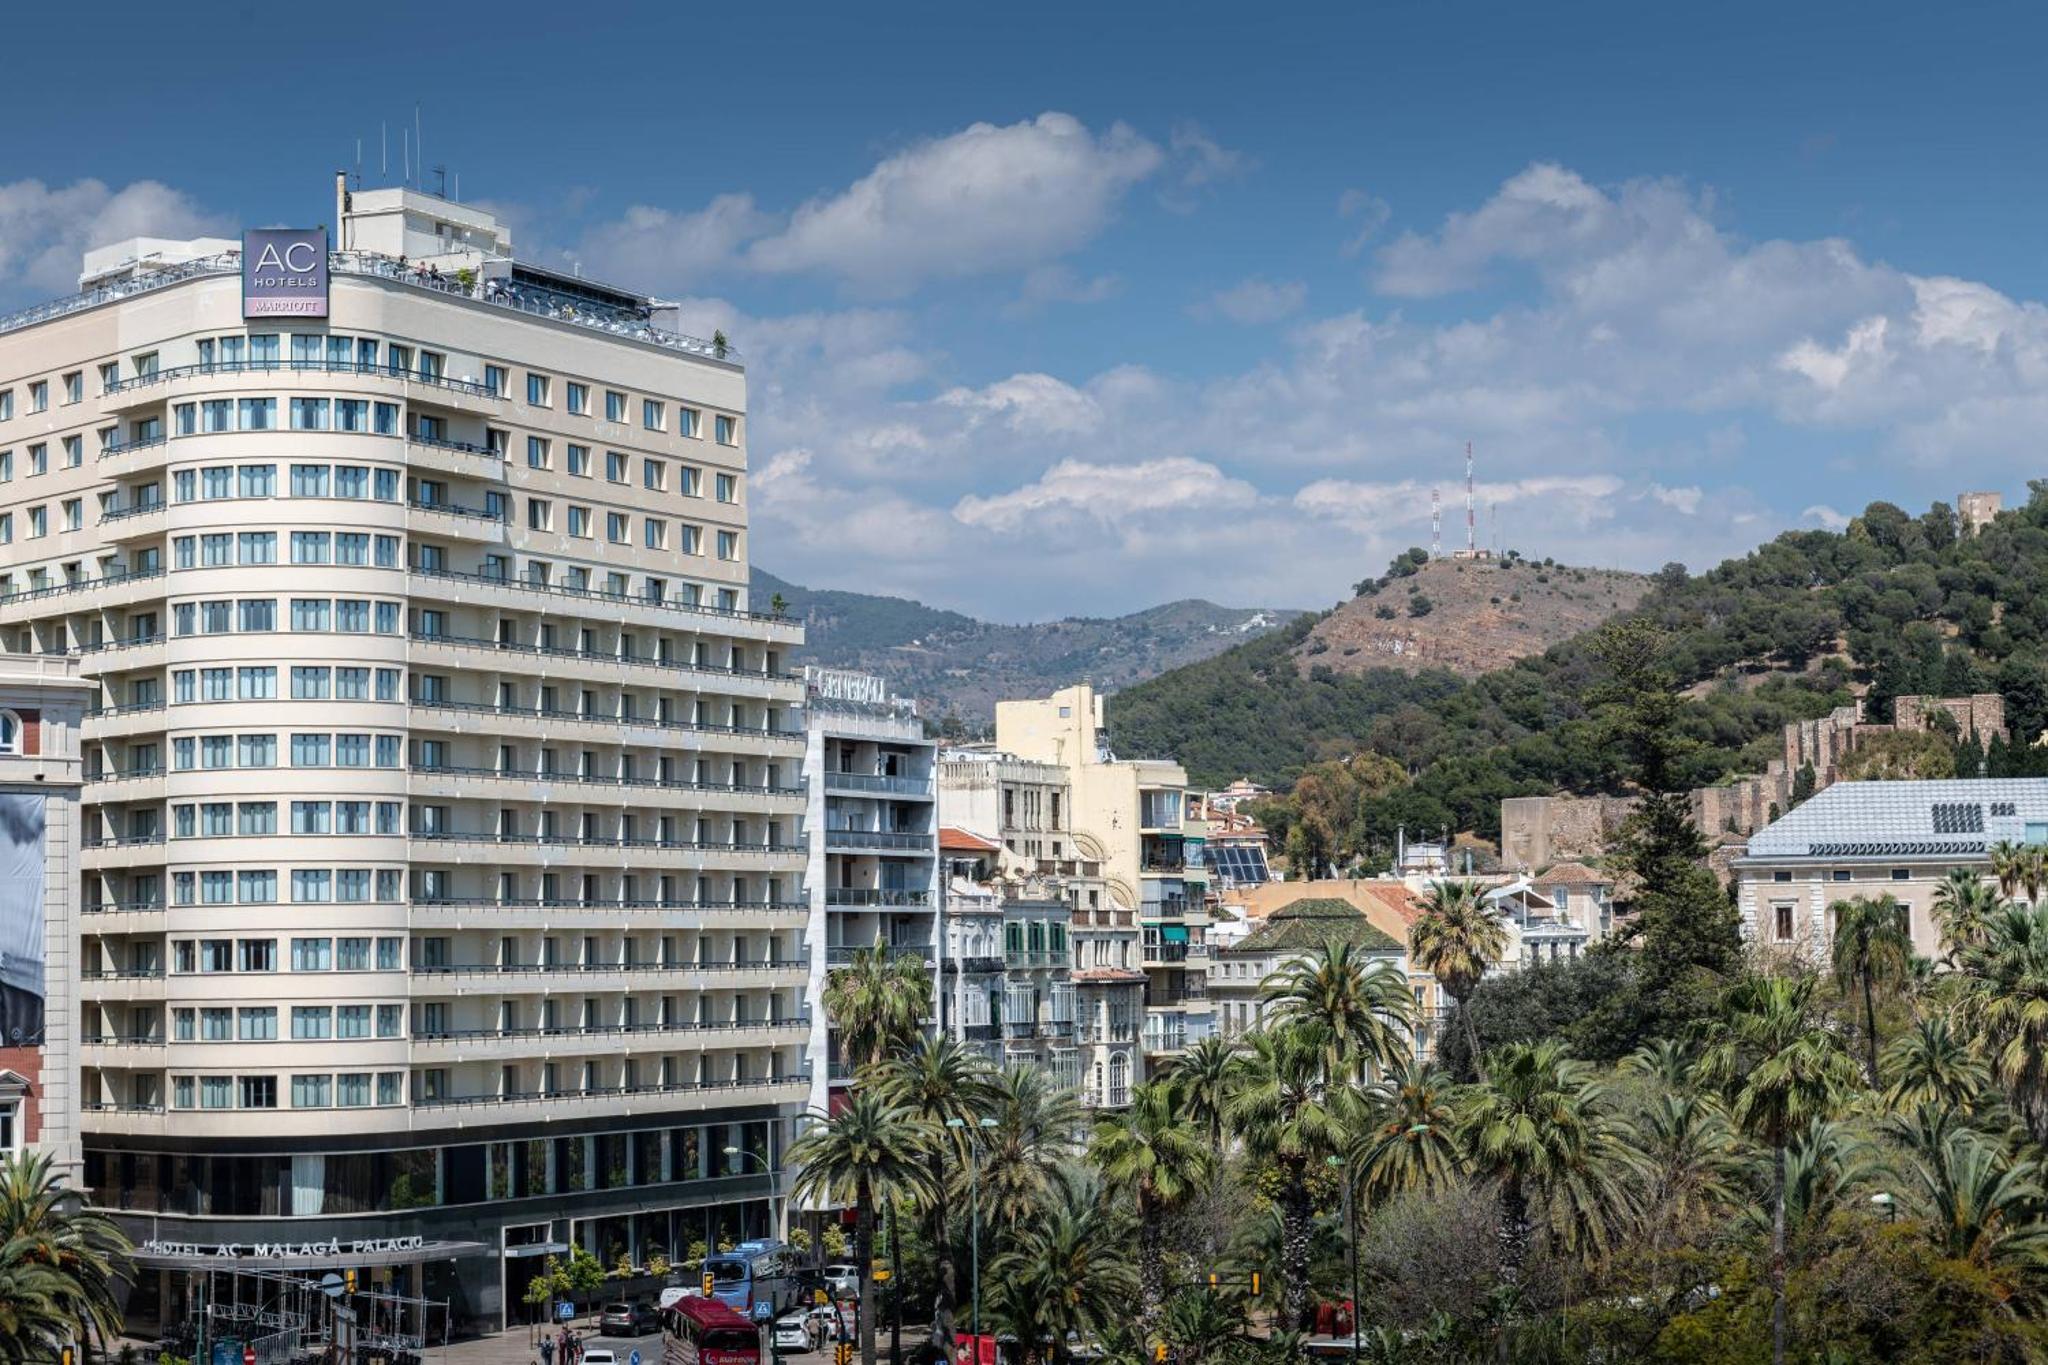 AC Hotel Málaga Palacio